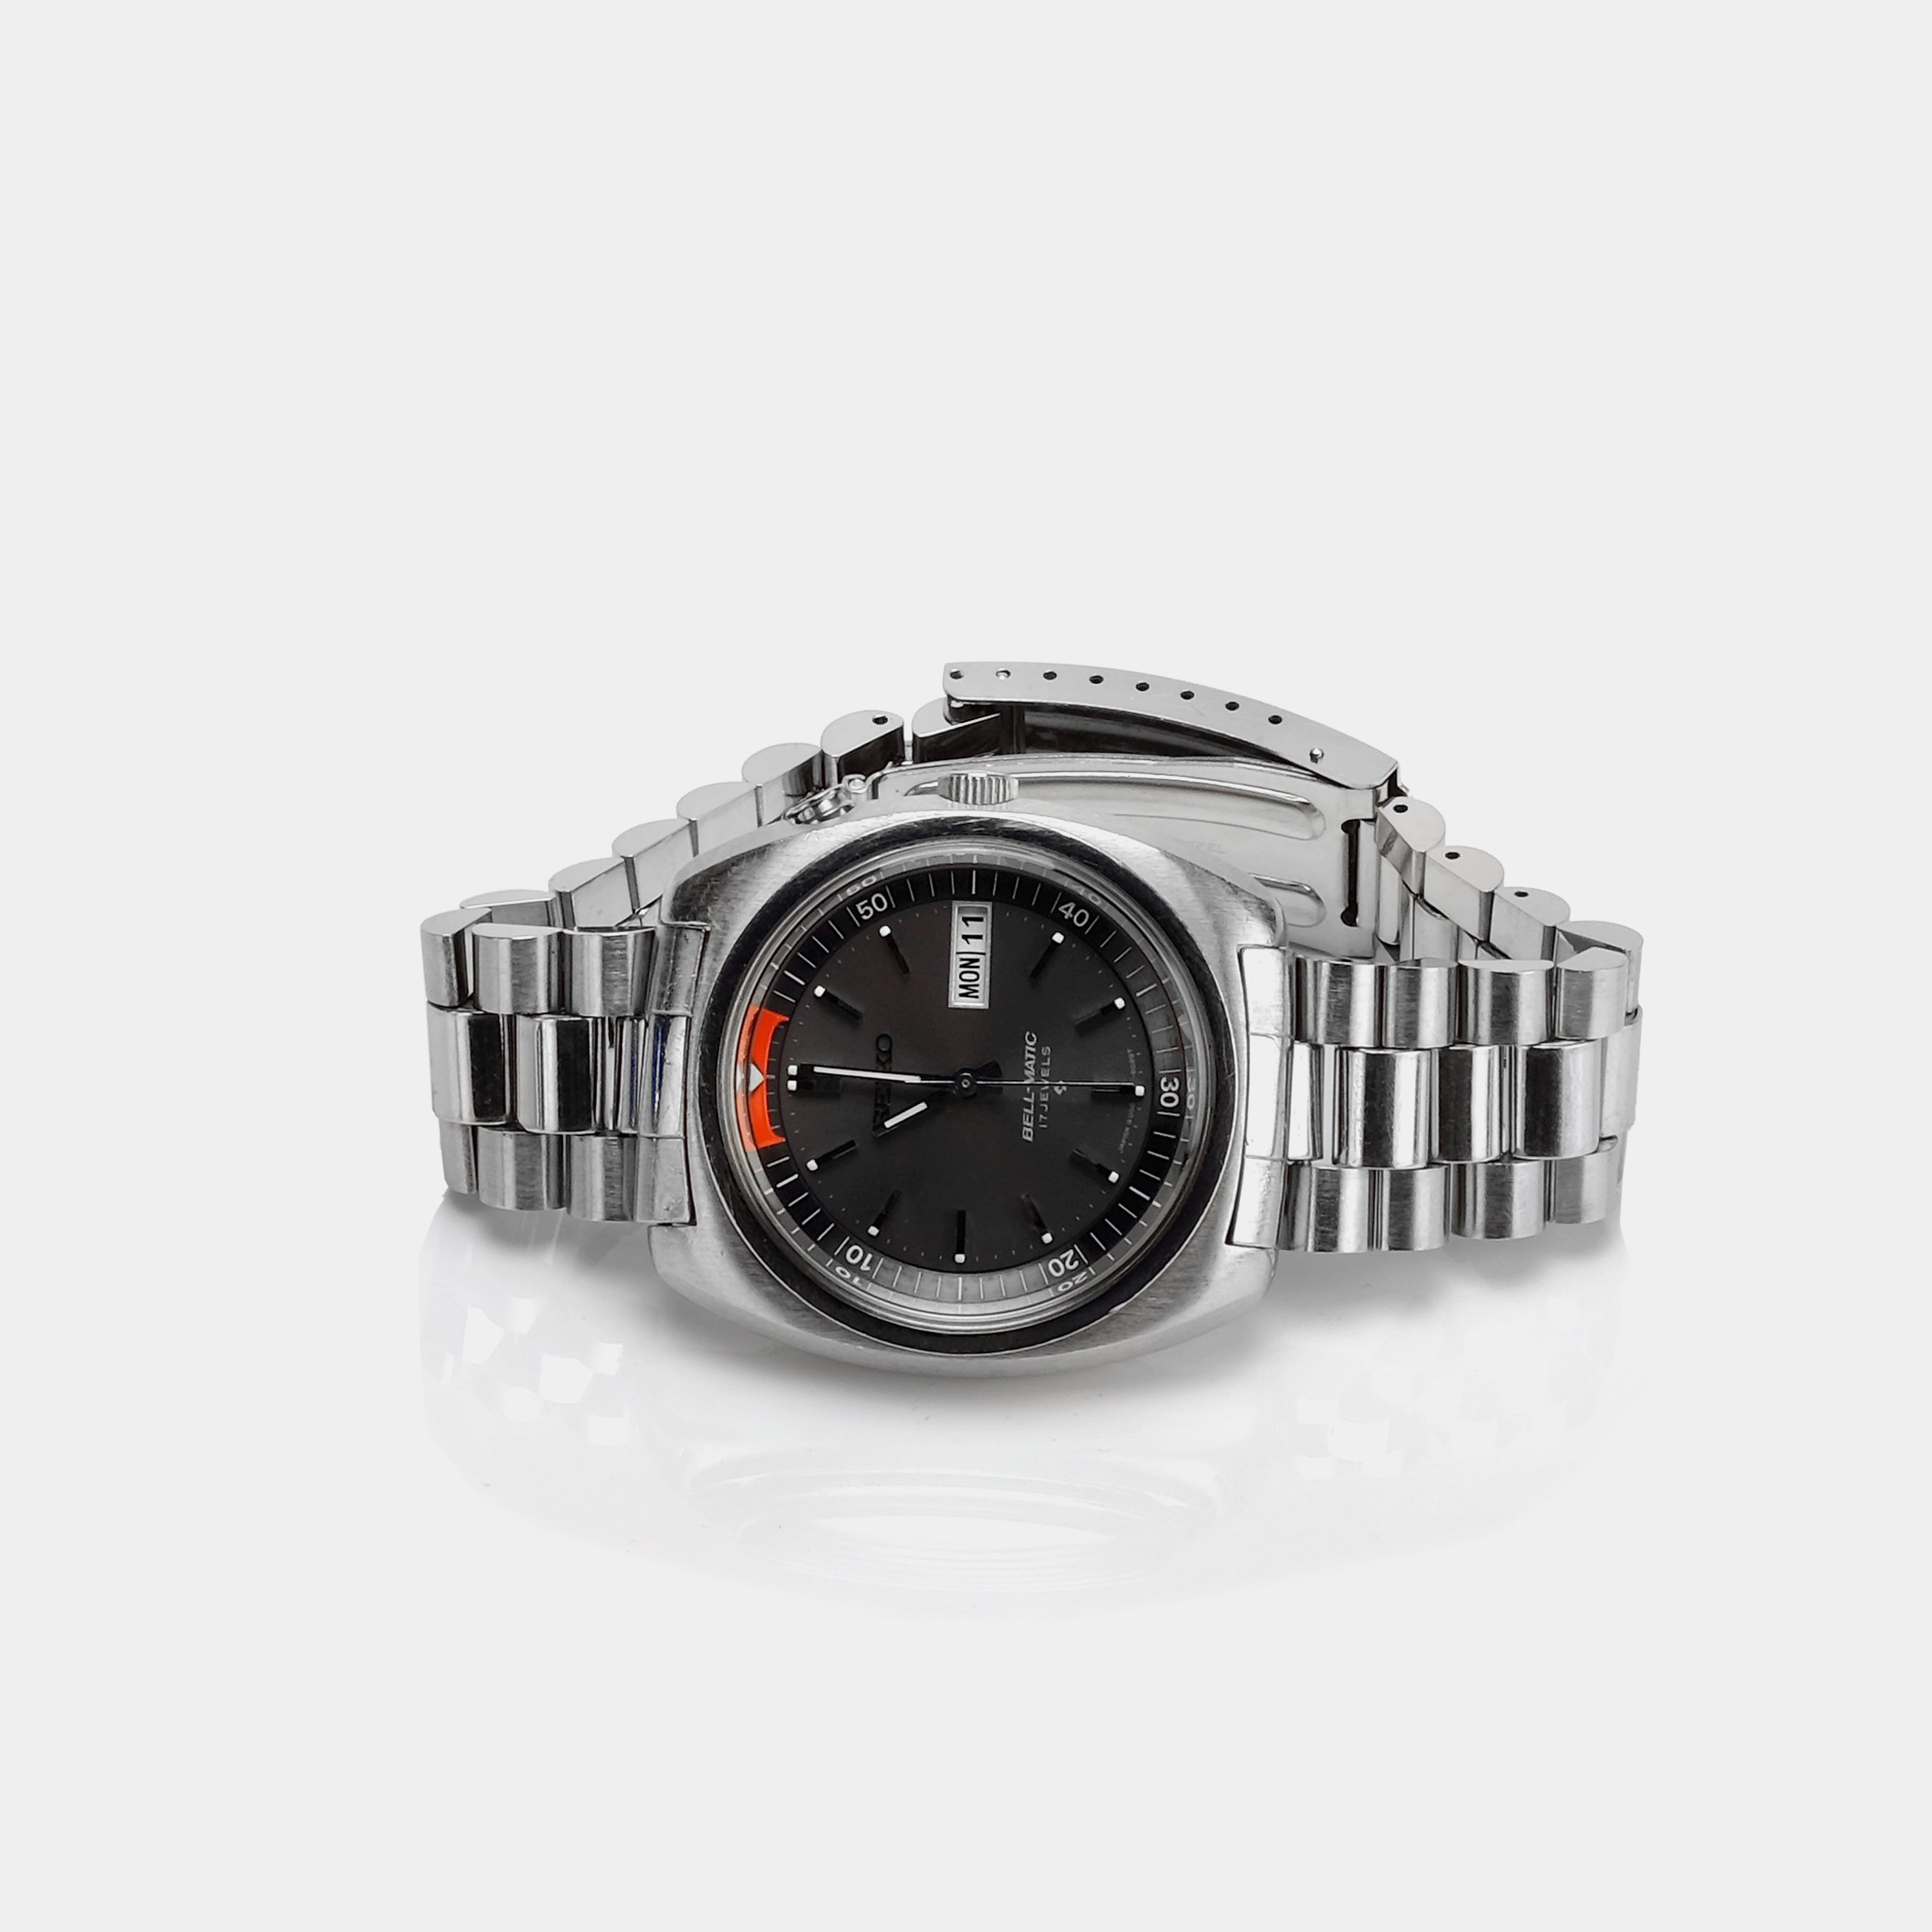 Seiko Bell-Matic Alarm Ref. 4006-6031 Grey Sunburst Dial 1971 Wristwatch